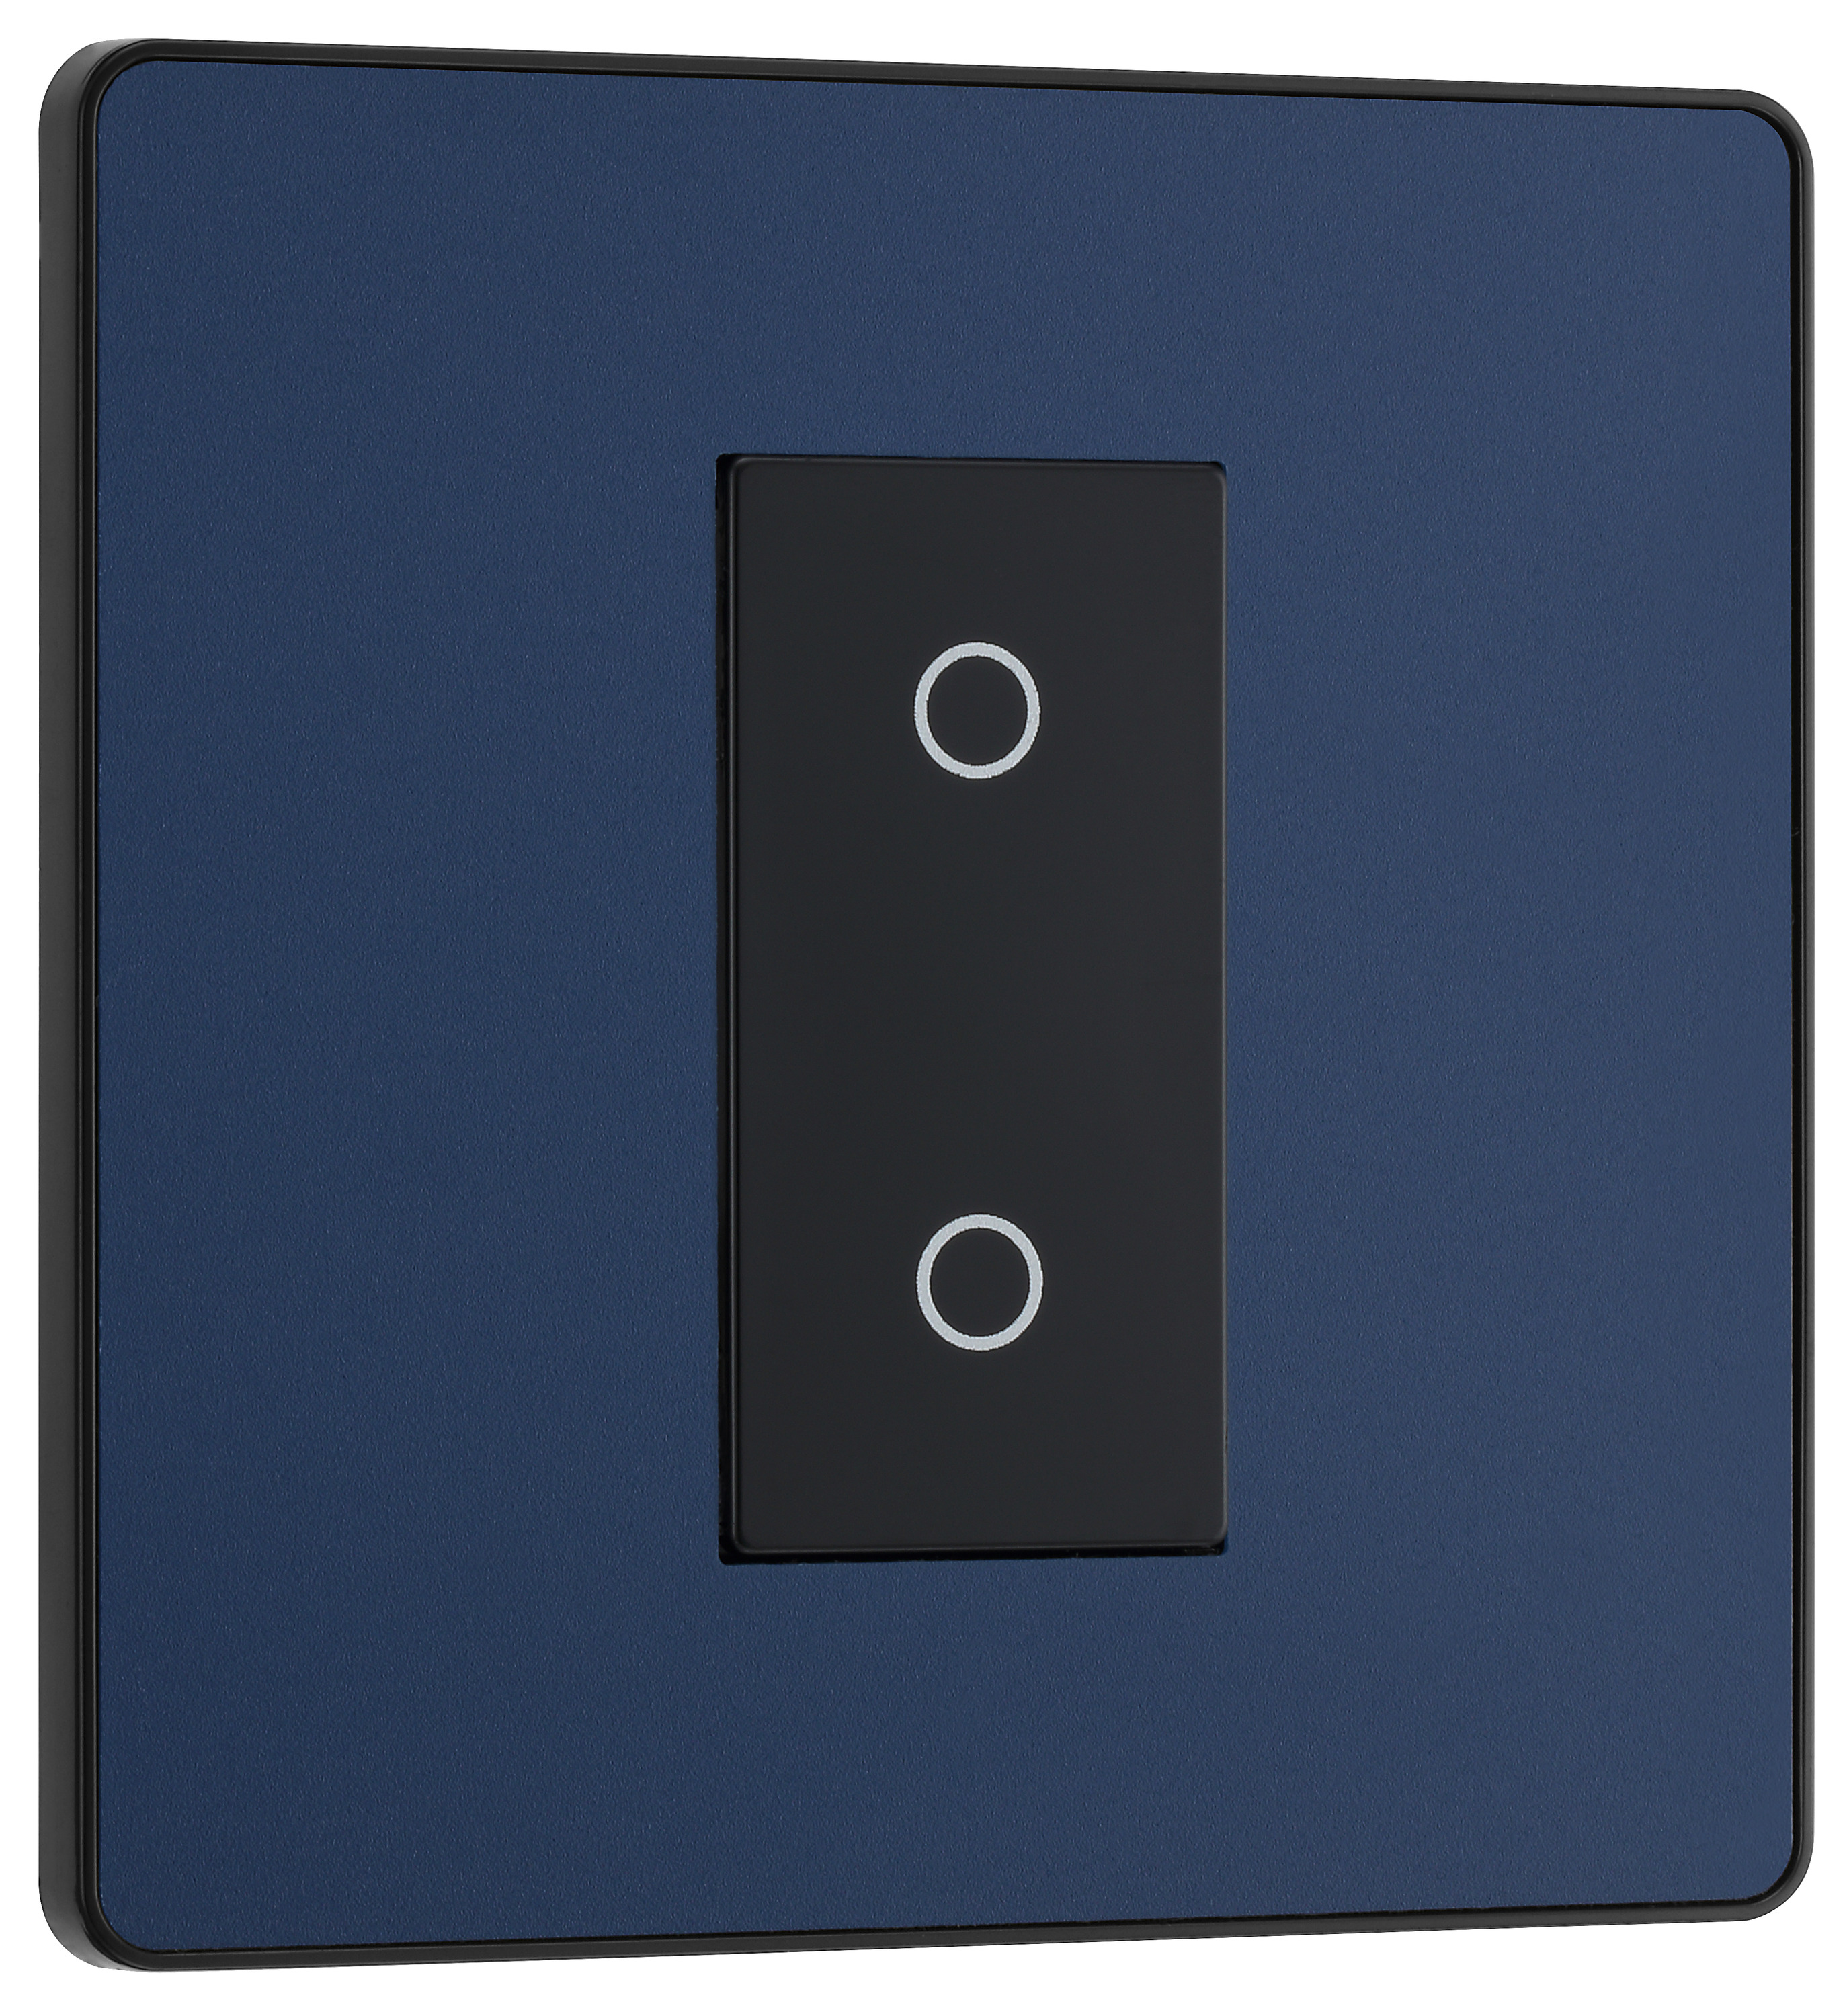 BG Evolve Master Matt Blue 2 Way Single Touch Dimmer Switch - 200W